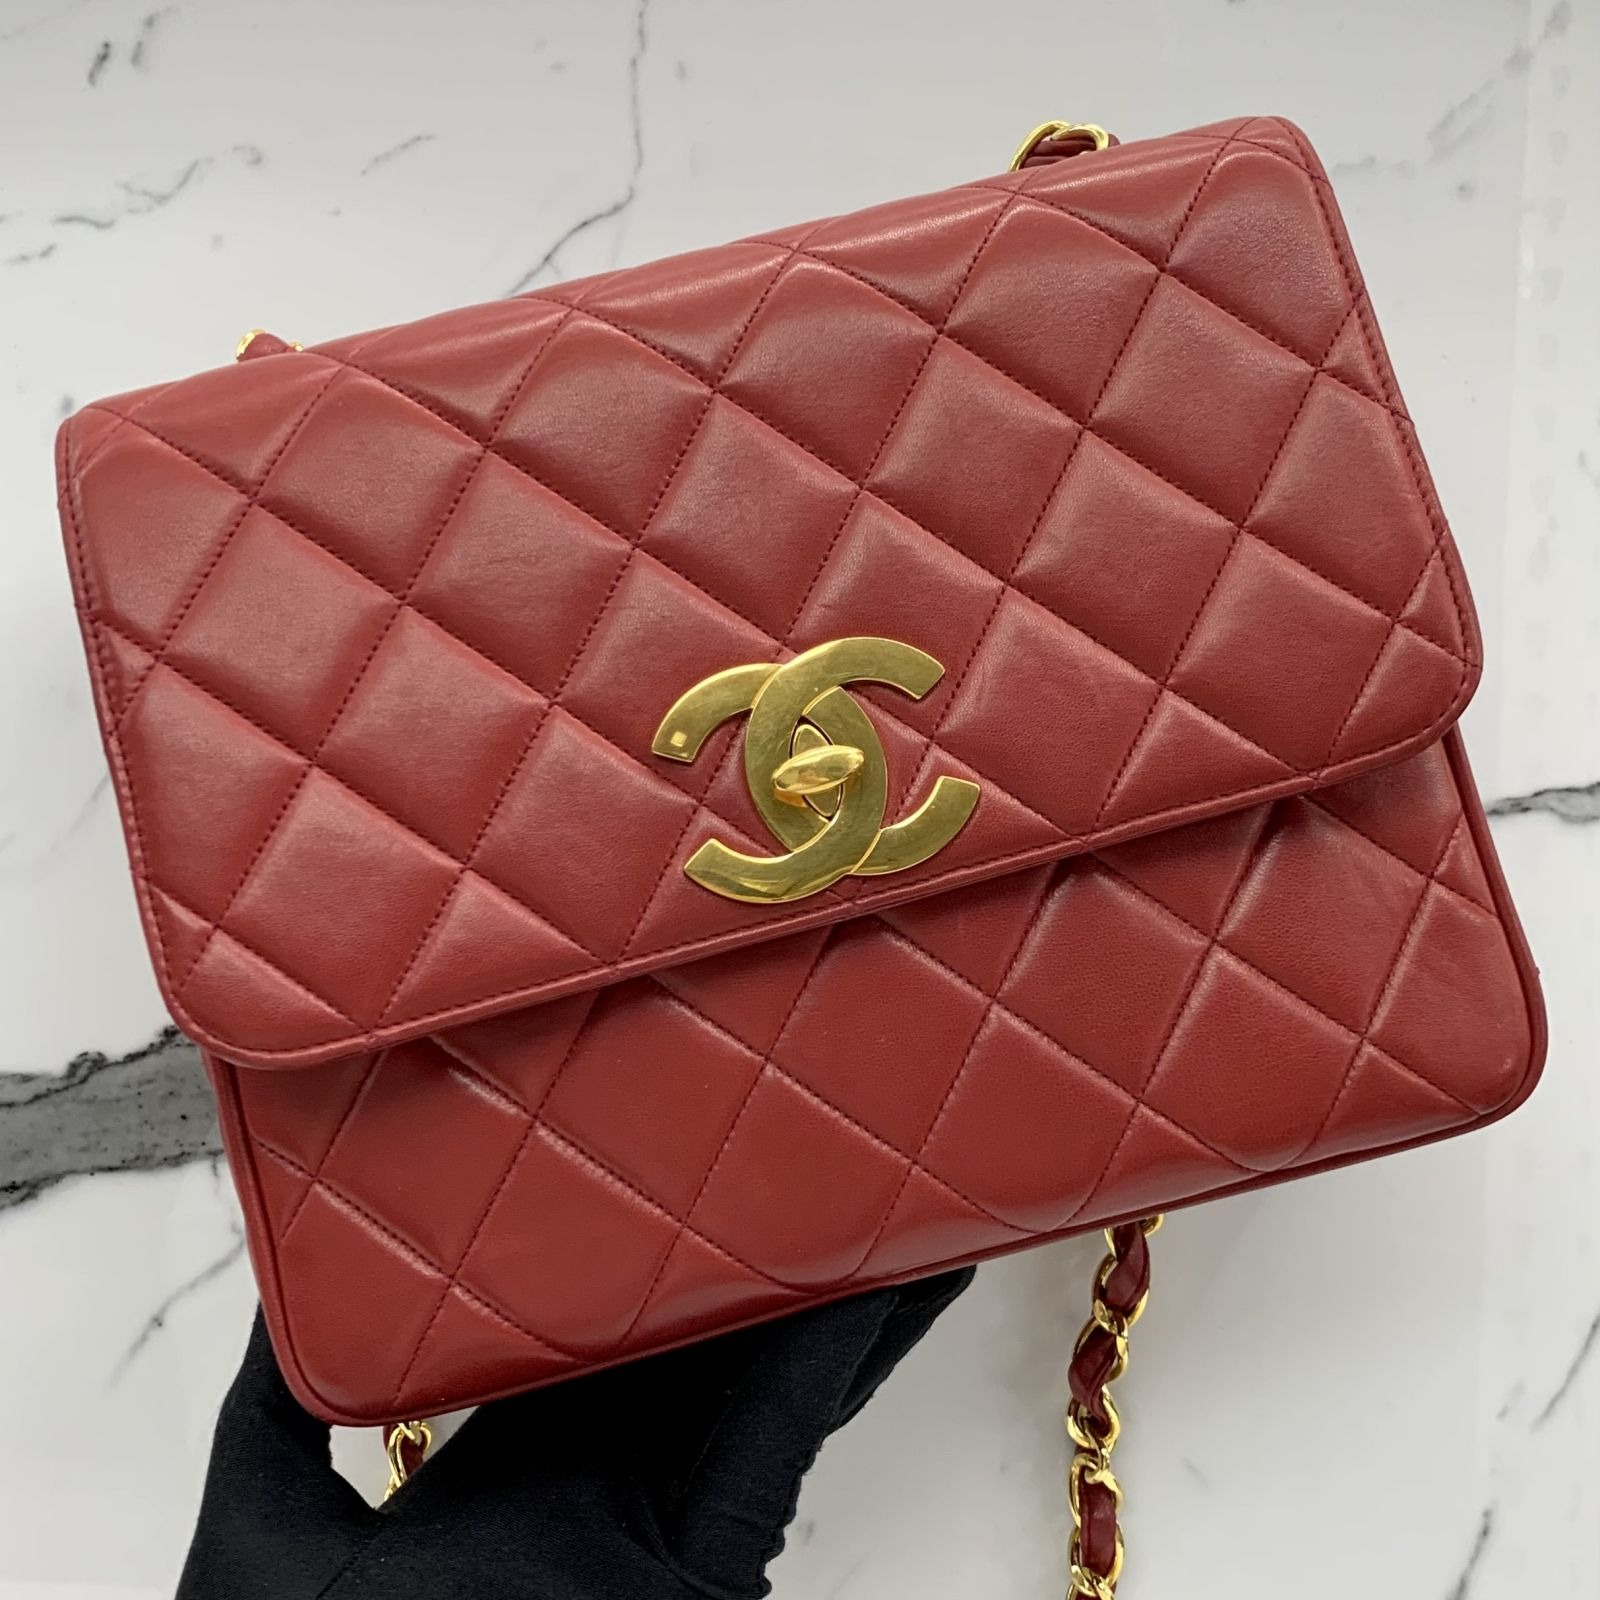 Chanel Classic Flapbag Red Purse Satchel Shoulder Bag Lambskin MUST HAVE!